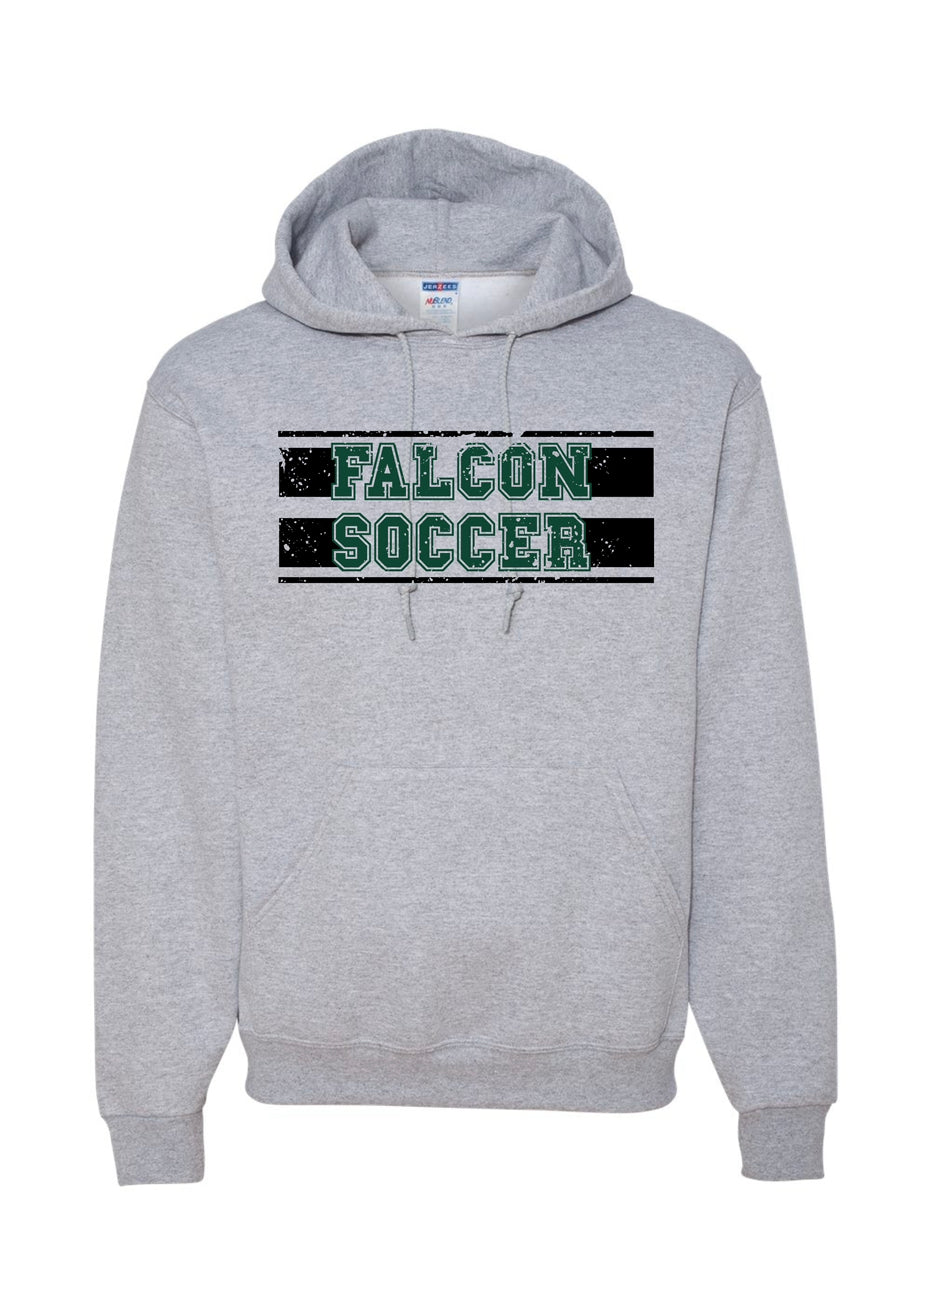 Falcon Soccer Hoodie - Grey